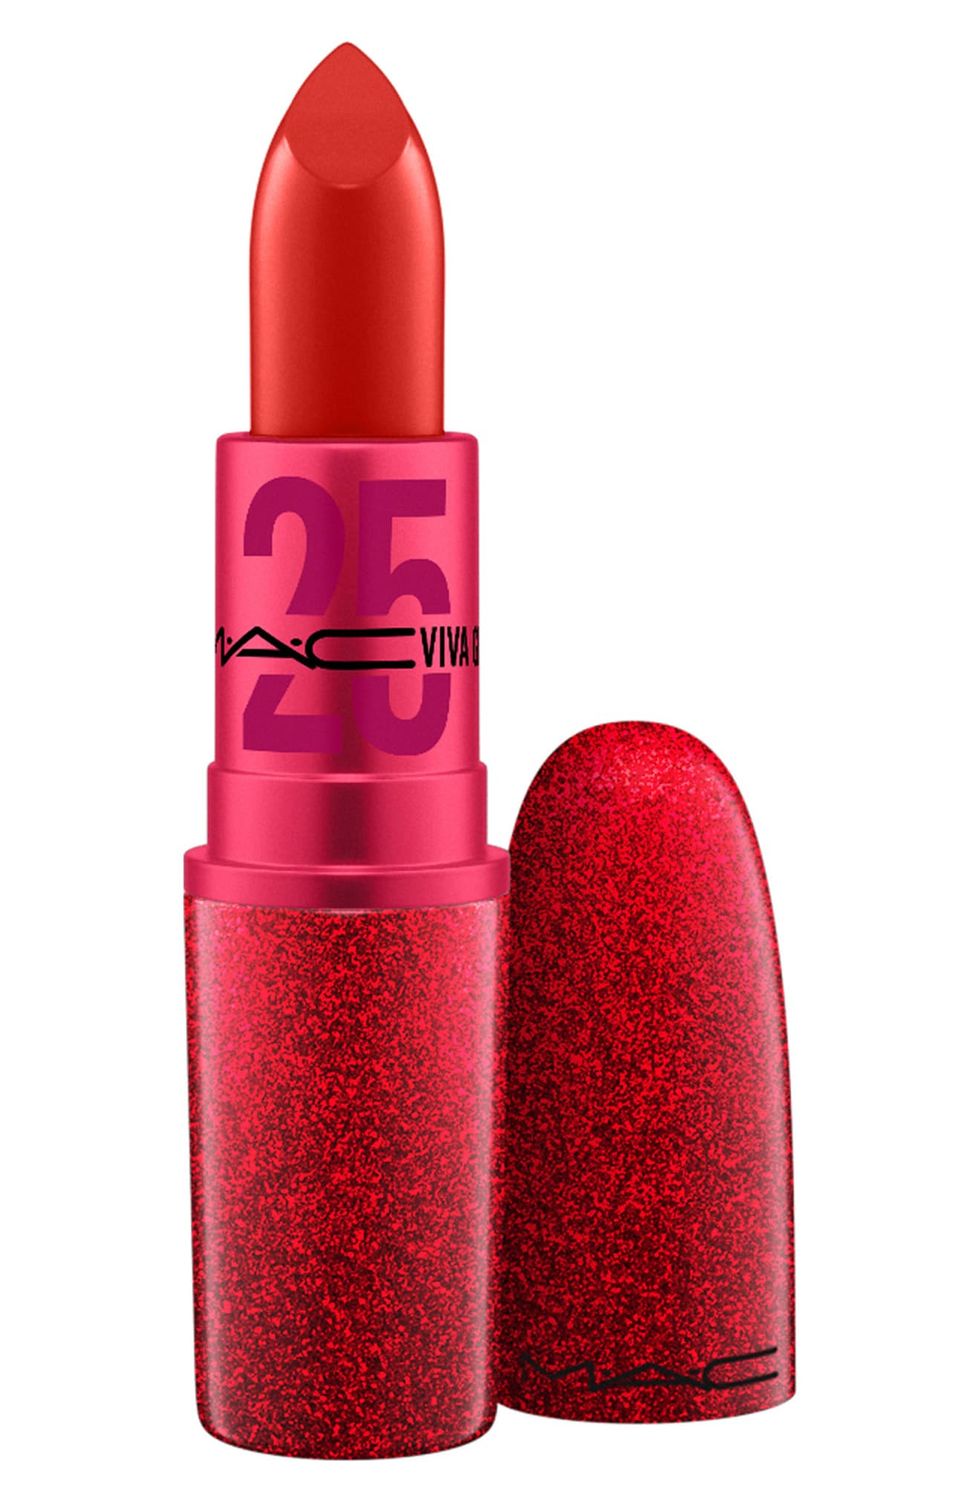 MAC Viva Glam 25 Lipstick